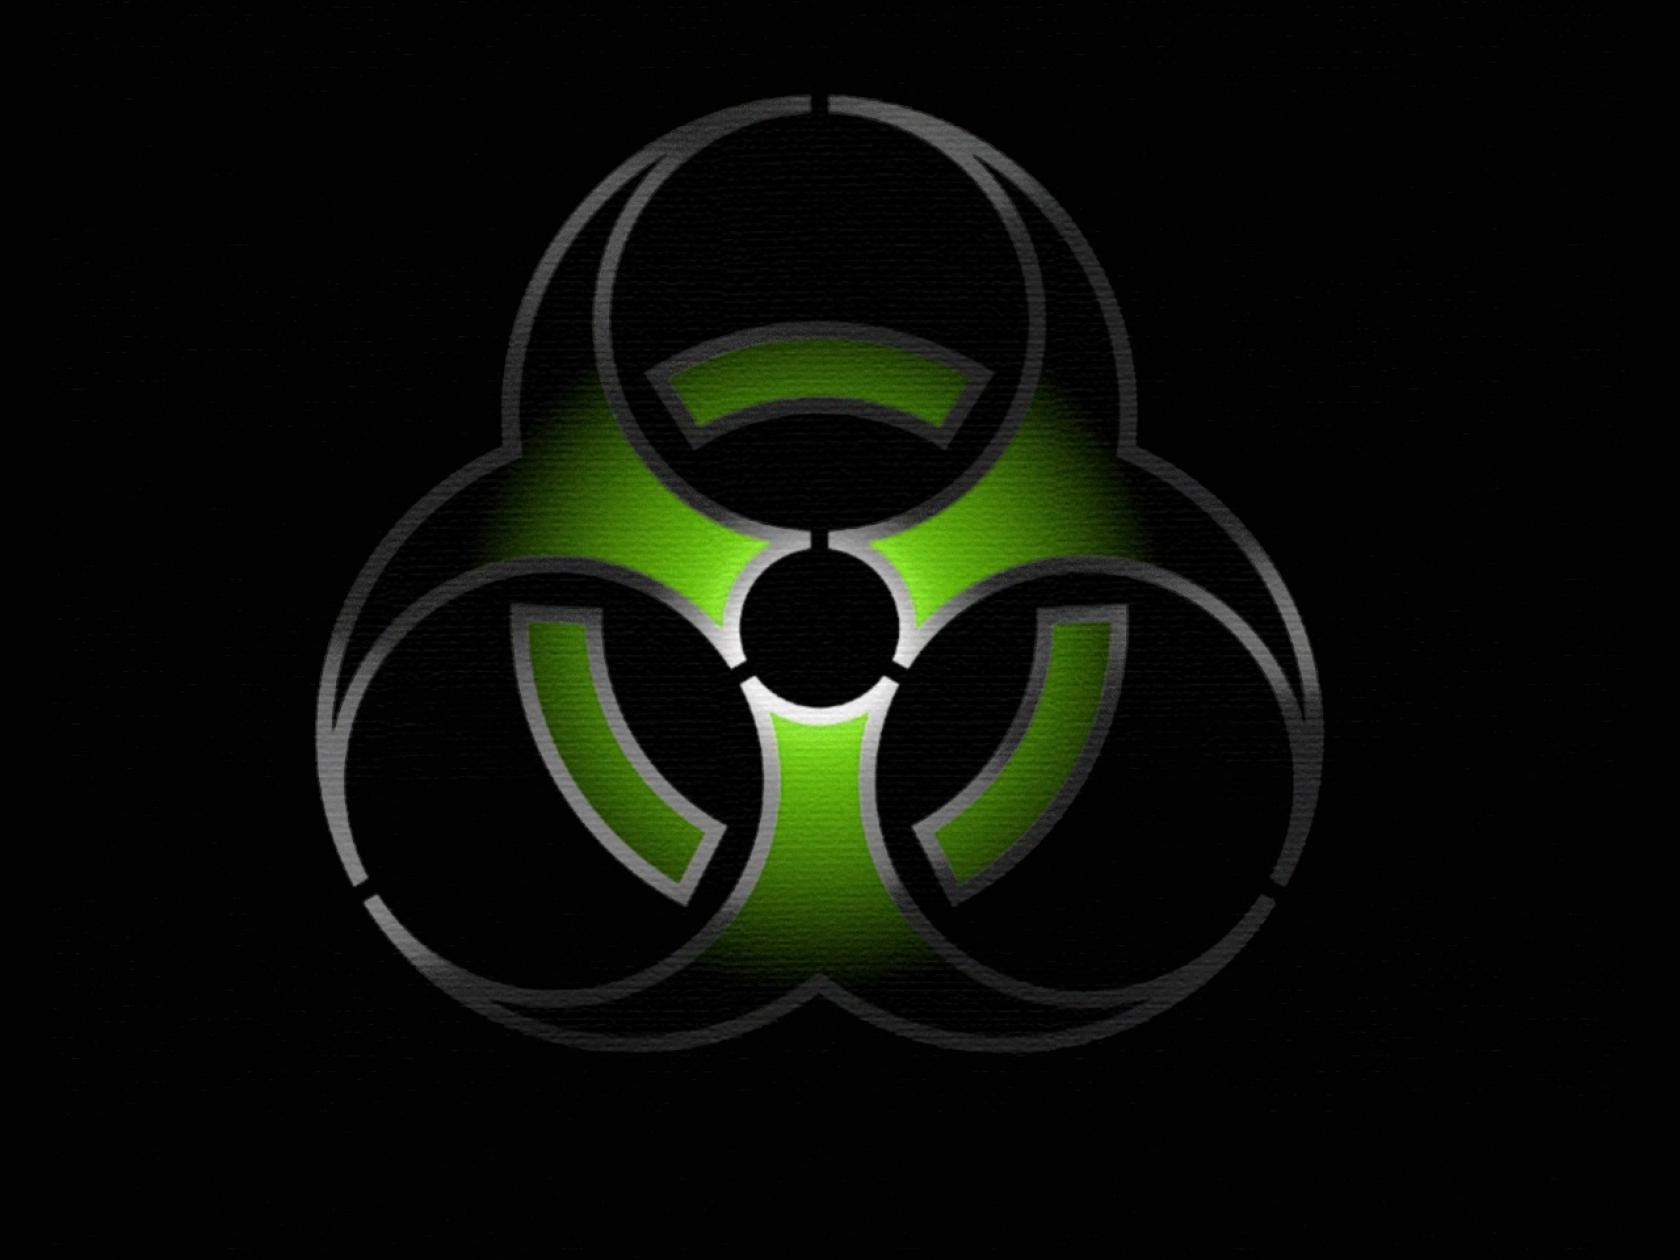 Biohazard Symbol Hd Wallpapers Free Download 1920x1080PX